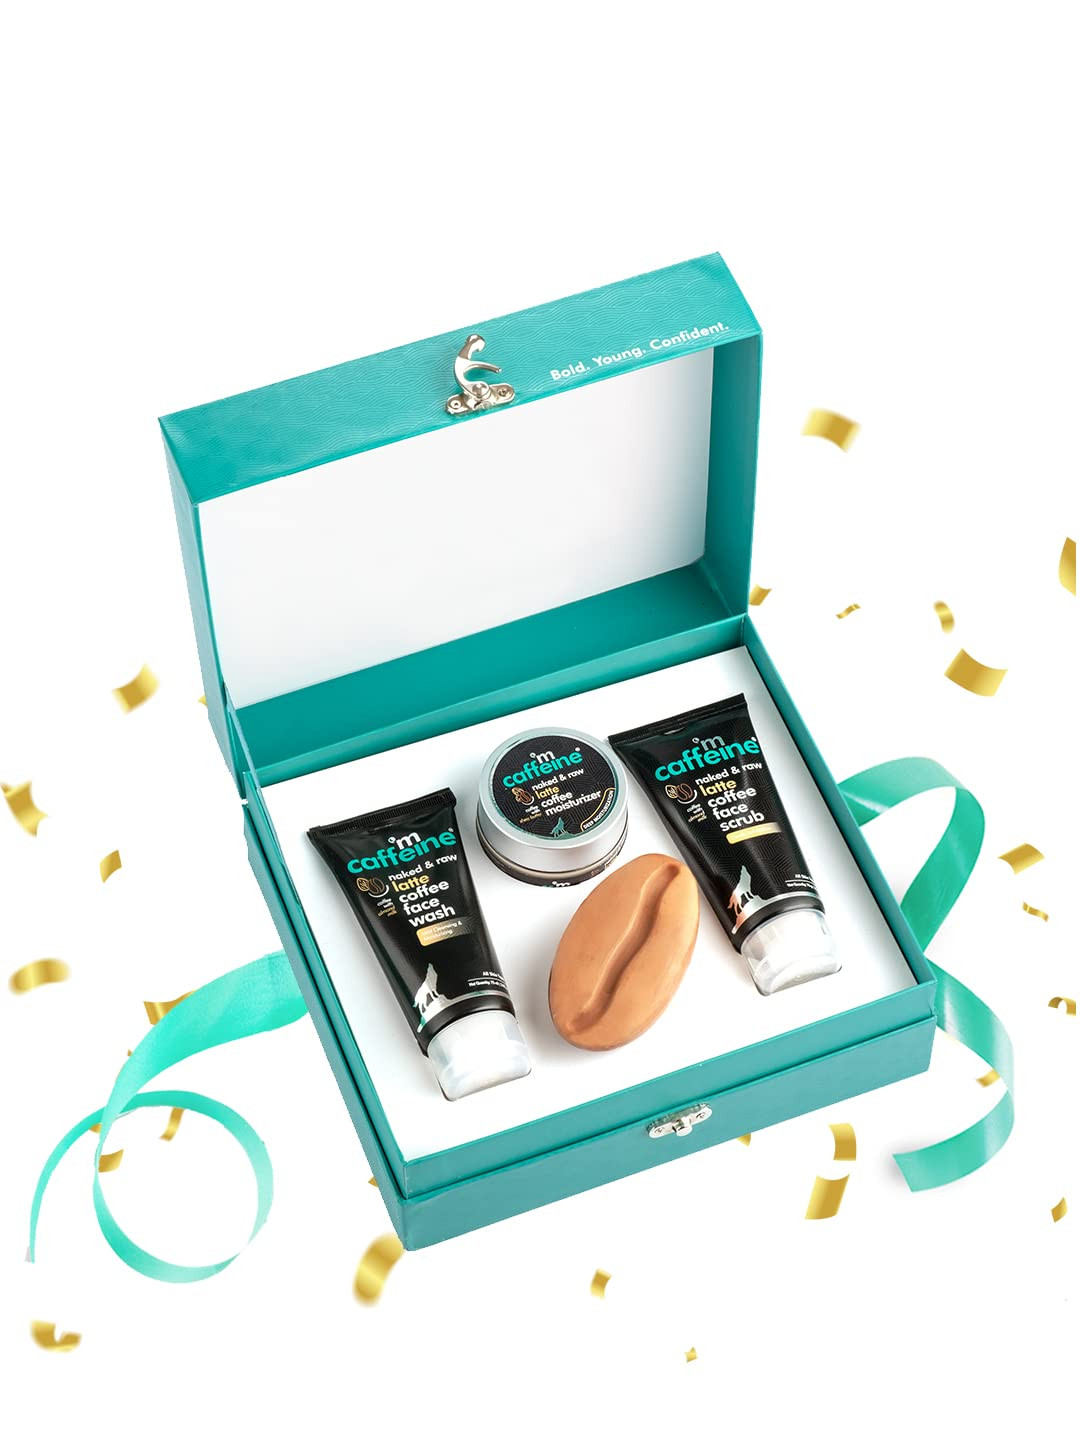 Raksha Bandhan Gift For Sister - Mcaffeine Mild Brew Latte Rakhi Gift Kit